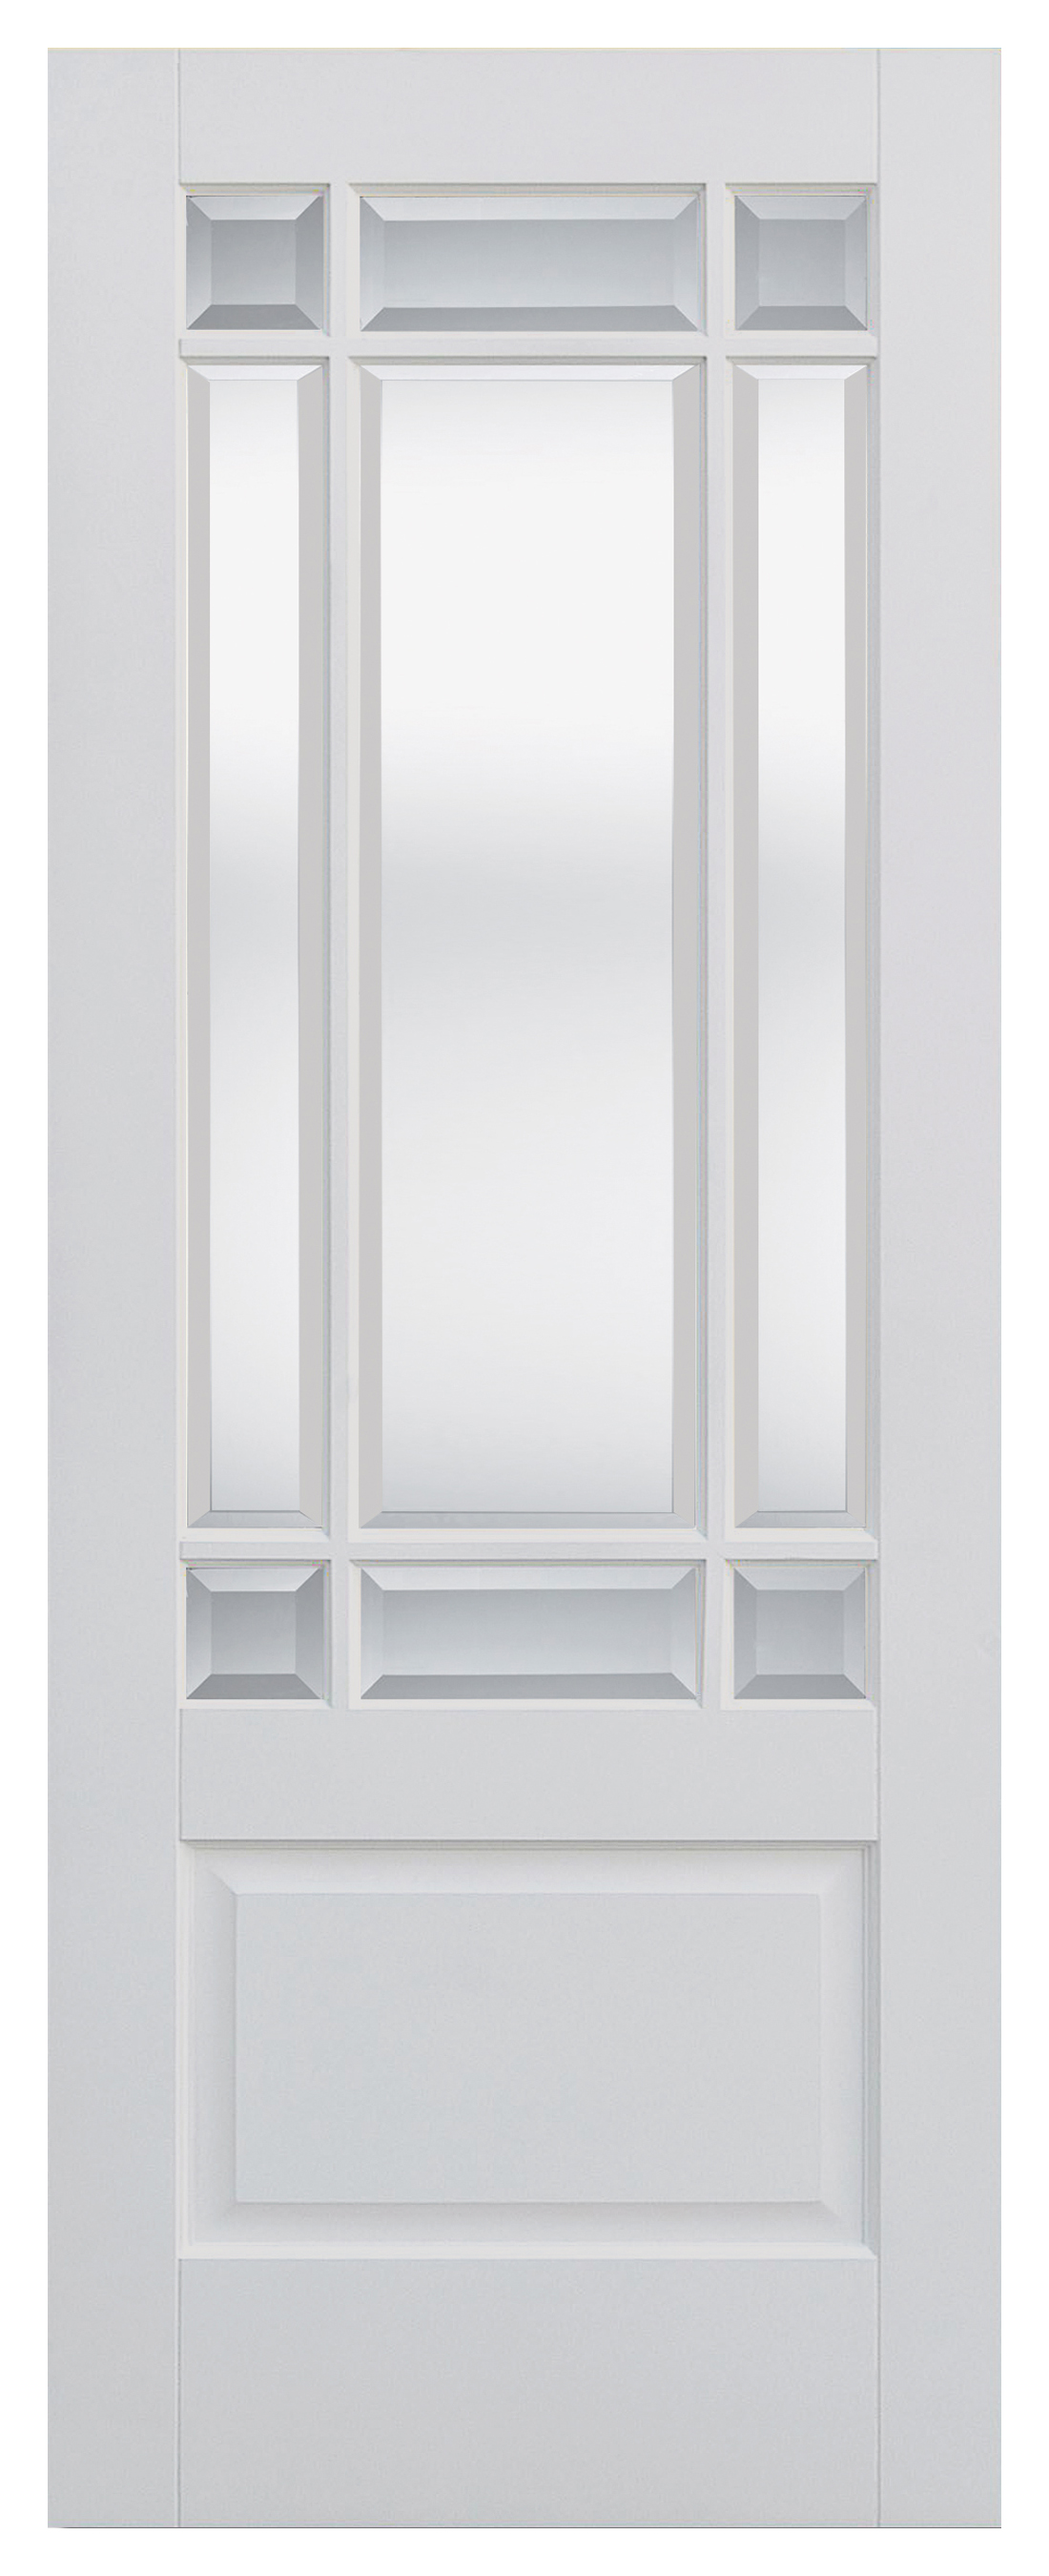 Image of LPD Internal Downham 9 Lite Glazed Primed White Solid Core Door - 726 x 2040mm